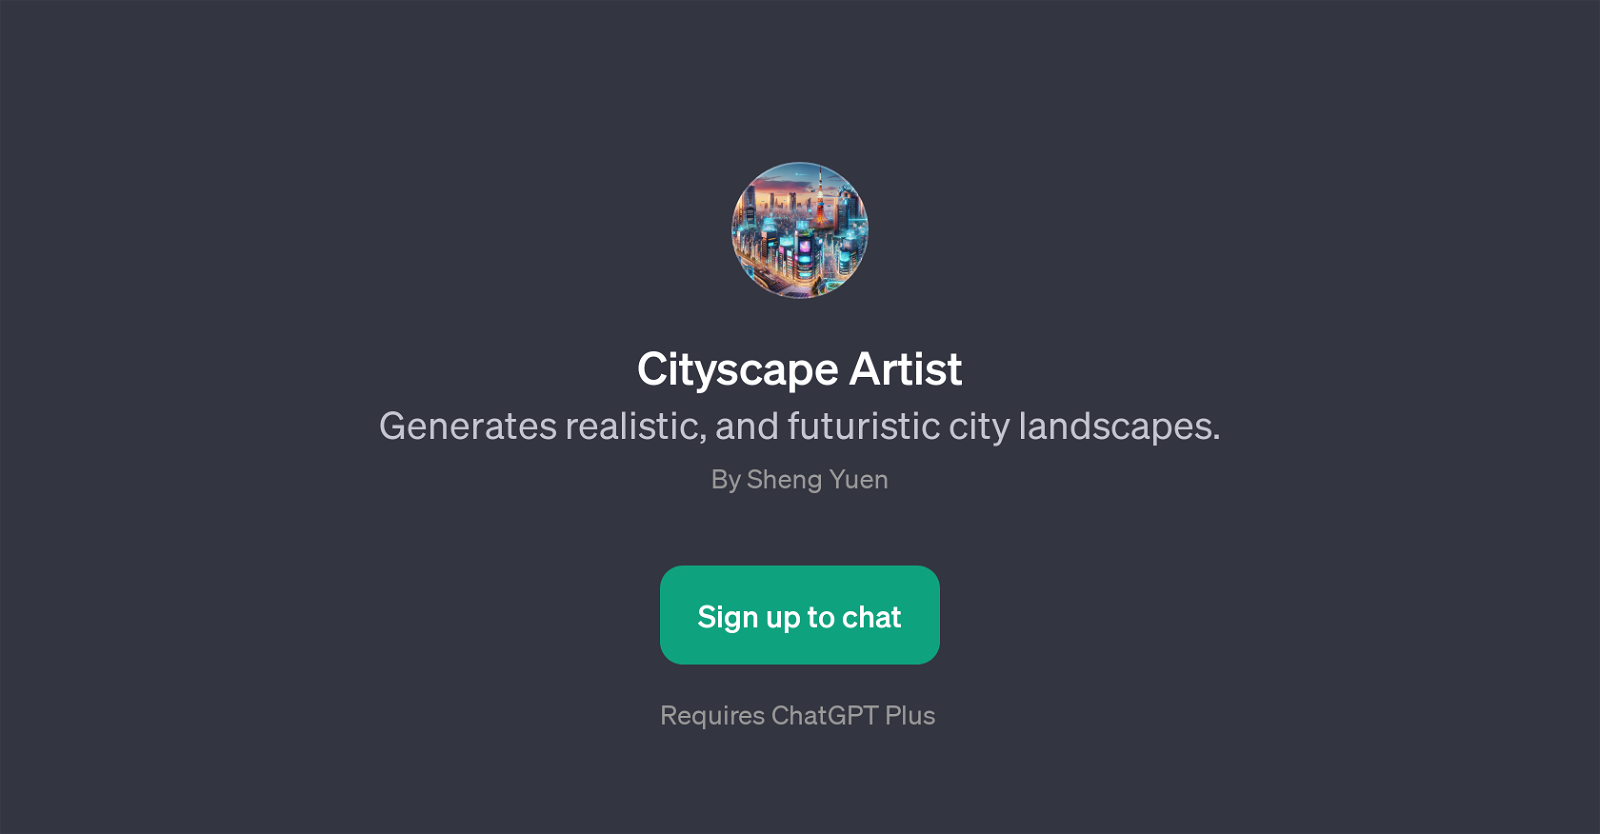 Cityscape Artist website